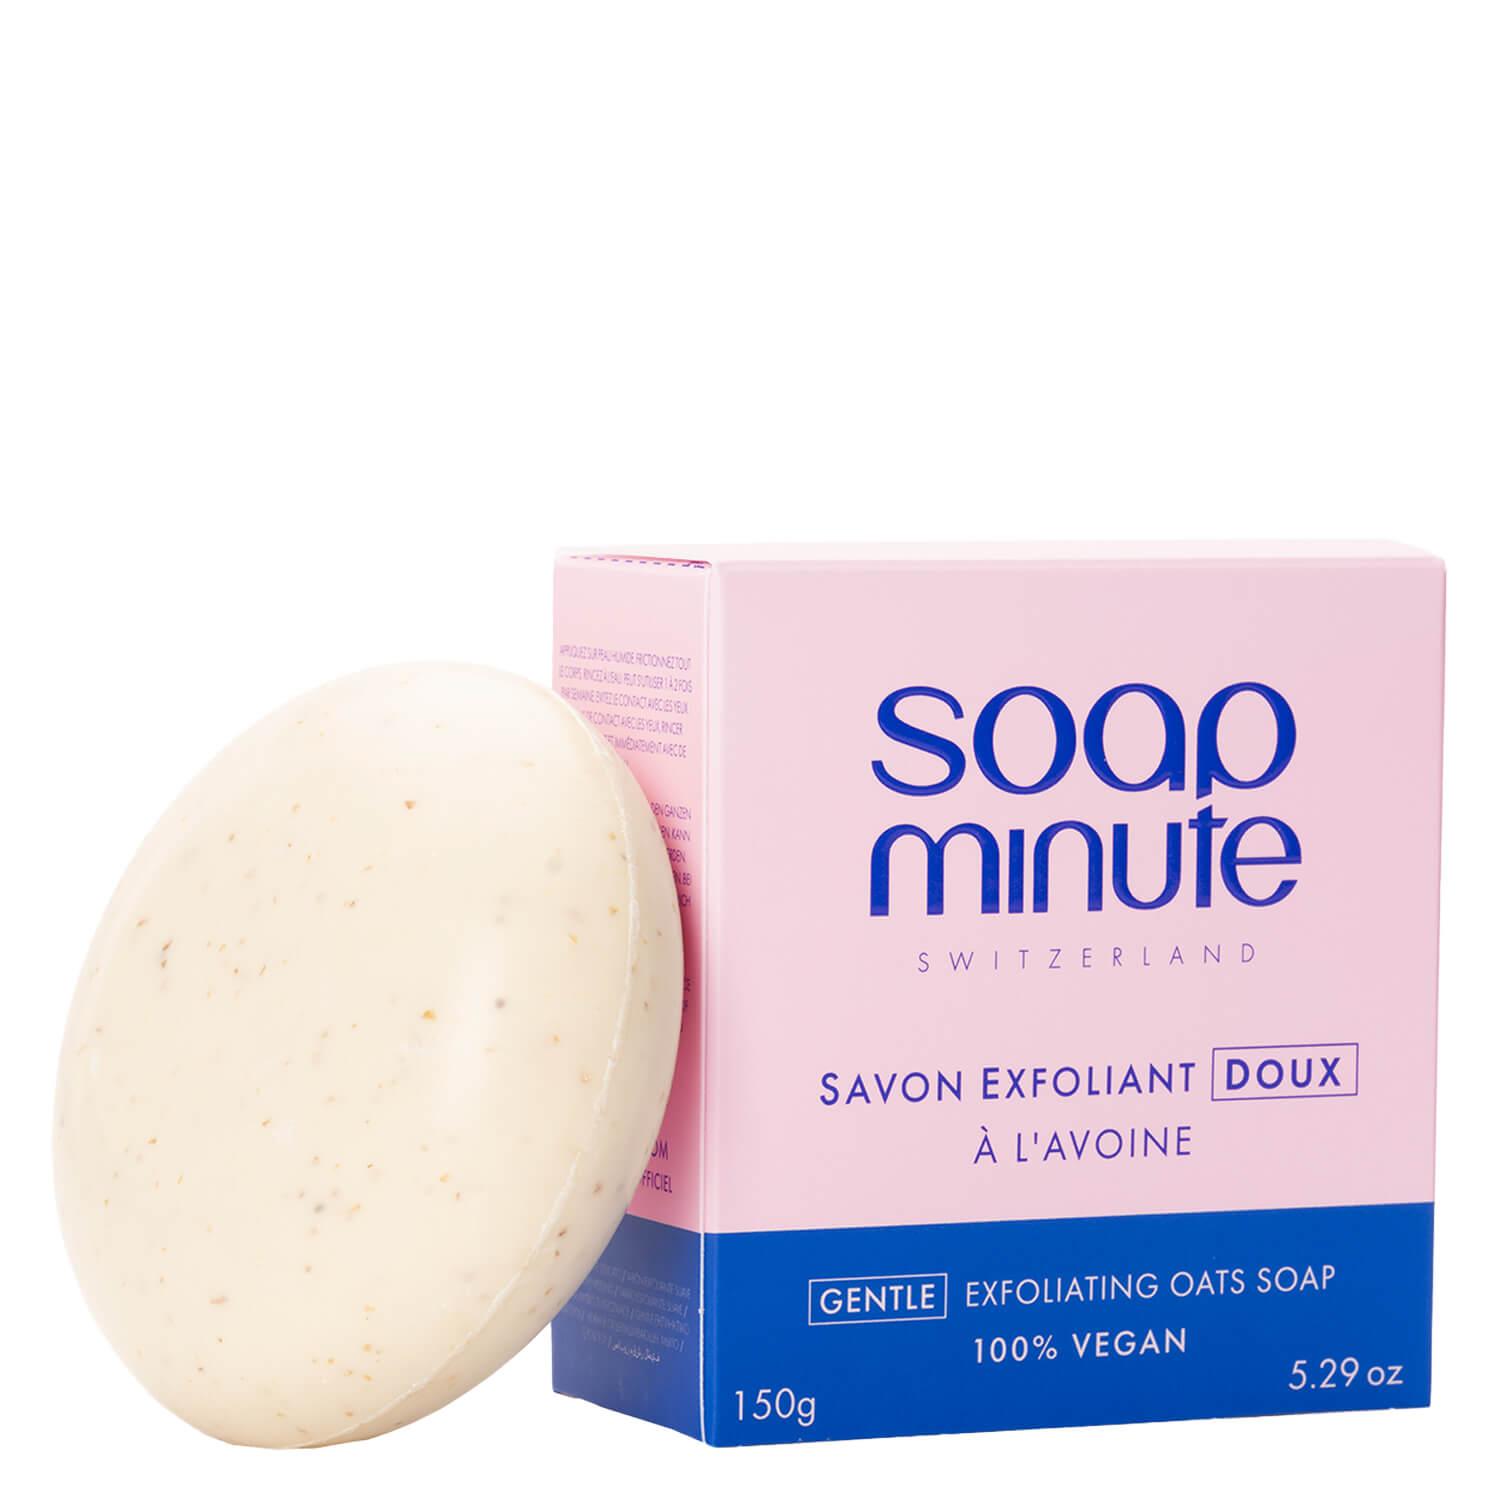 soapminute - Gentle Exfoliating Oats Soap